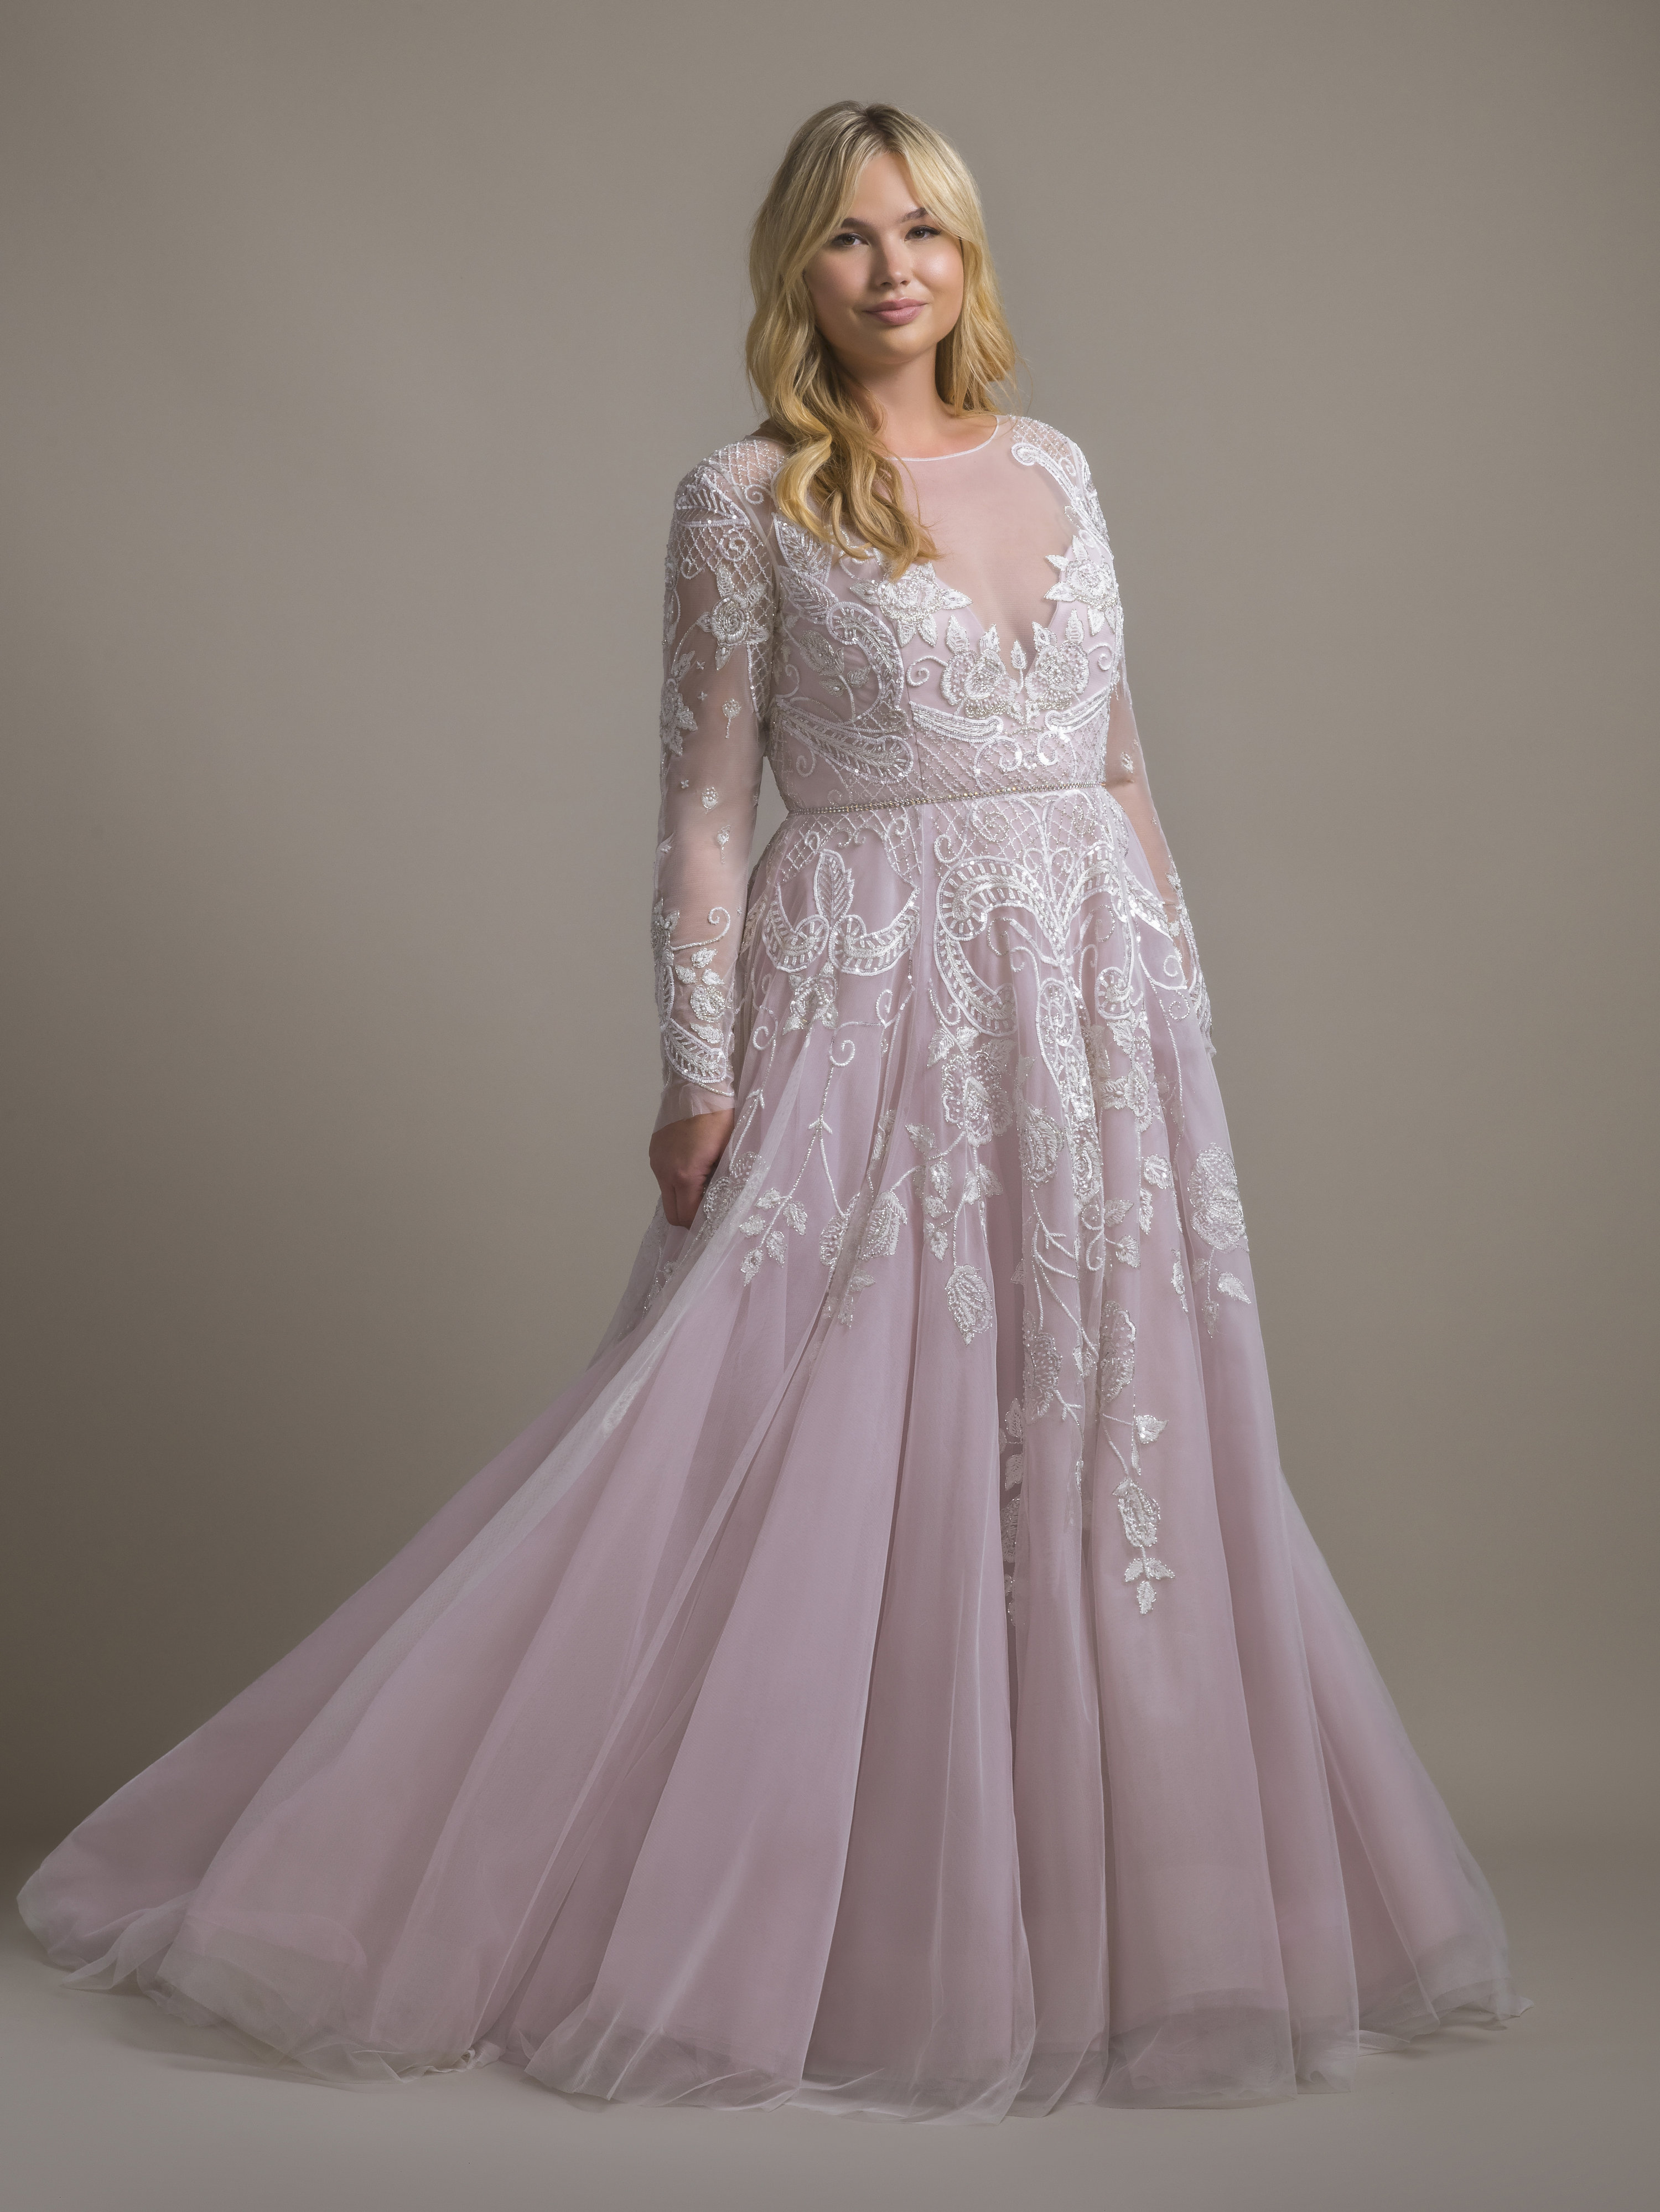 windsor pink lace dress